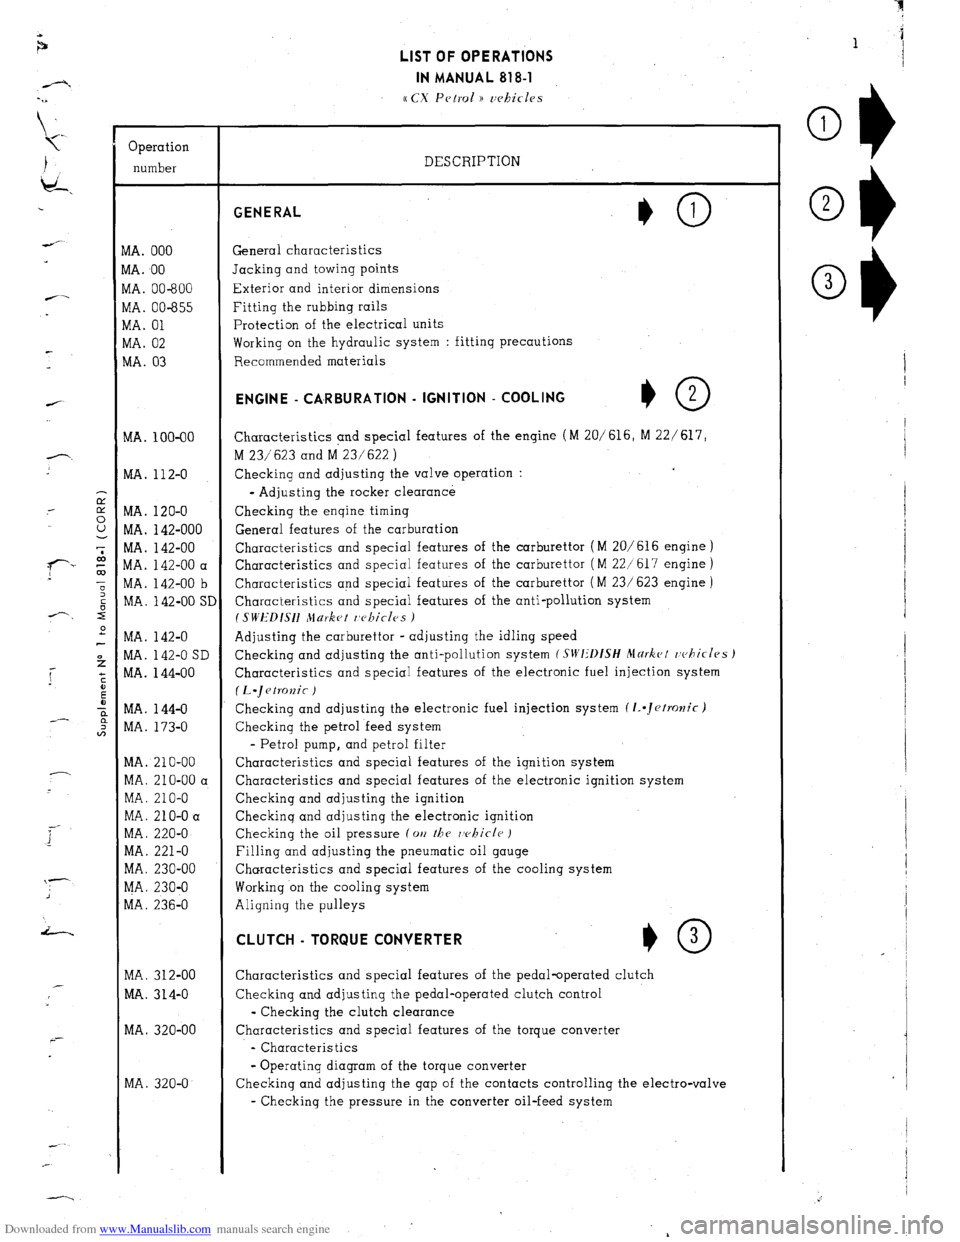 Citroen CX 1977 1.G Workshop Manual Downloaded from www.Manualslib.com manuals search engine Operation 
number 
VIA. 000 
VIA. 00 
VIA. 00-600 
vlA. 00-655 
VIA. 01 
WA. 02 
MA. 03 
MA. 100-00 
MA. 112-O 
MA. 120-O 
MA. 142-000 
MA. 142